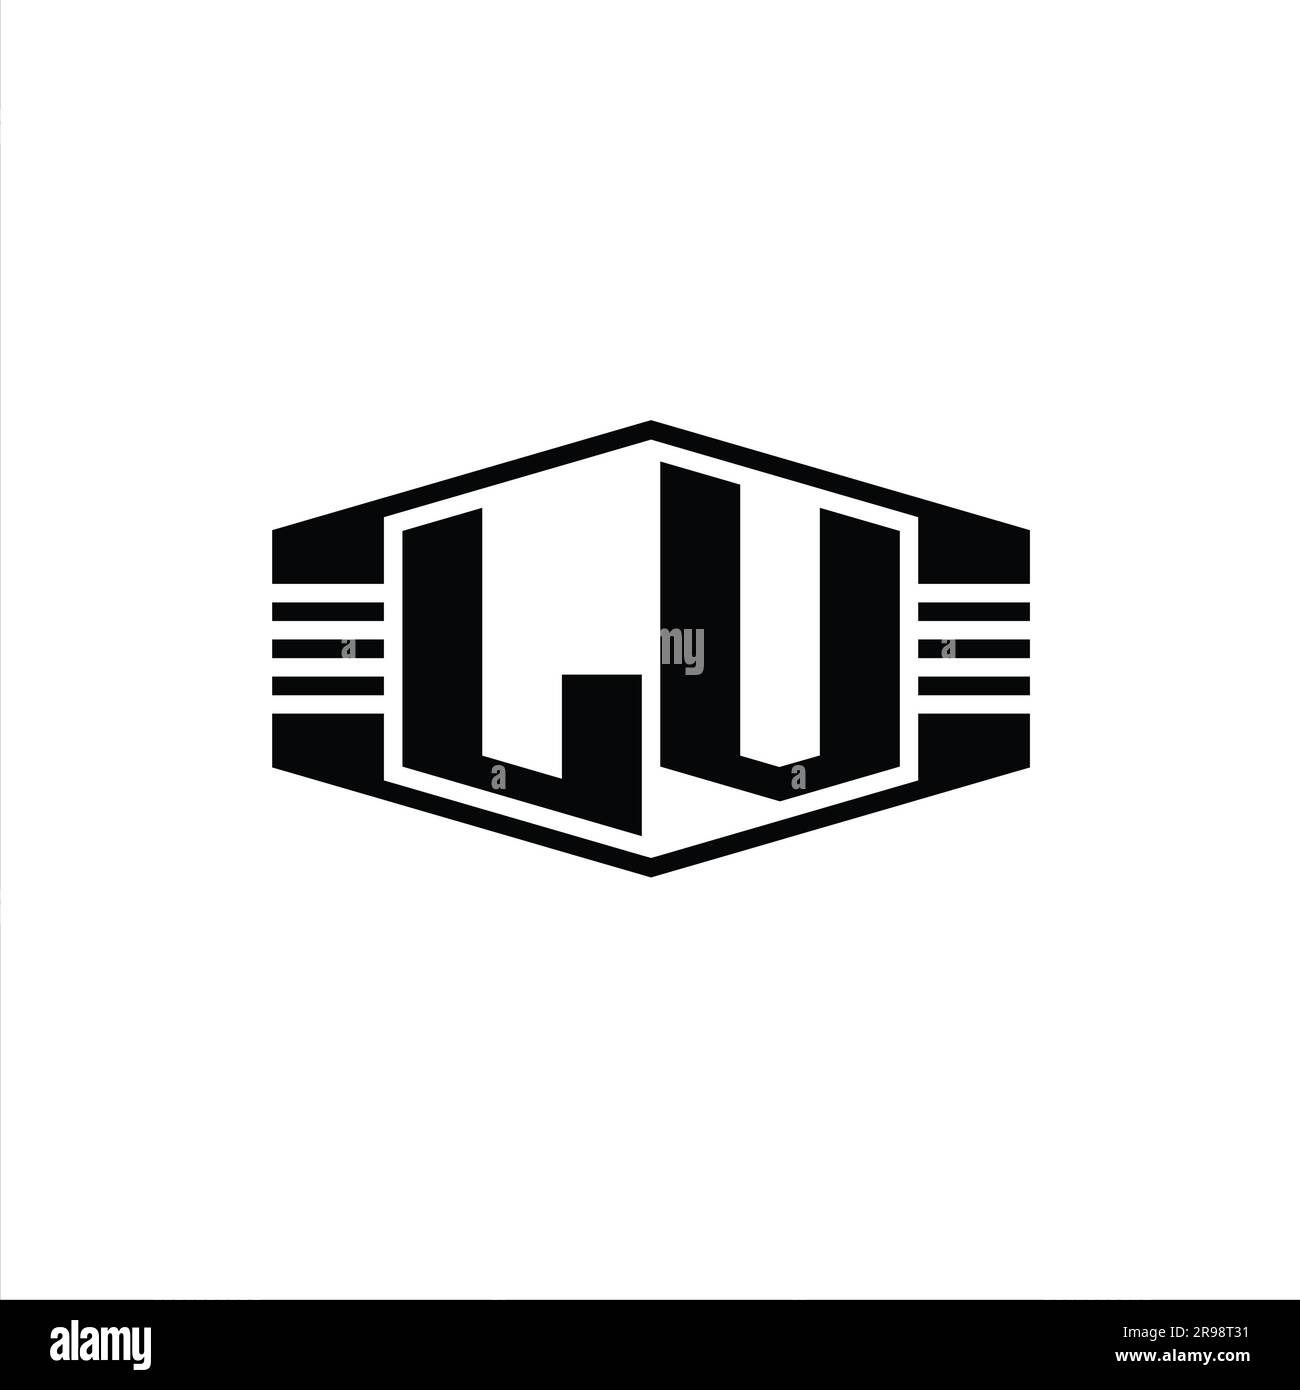 Lv logo monogram with emblem style isolated Vector Image